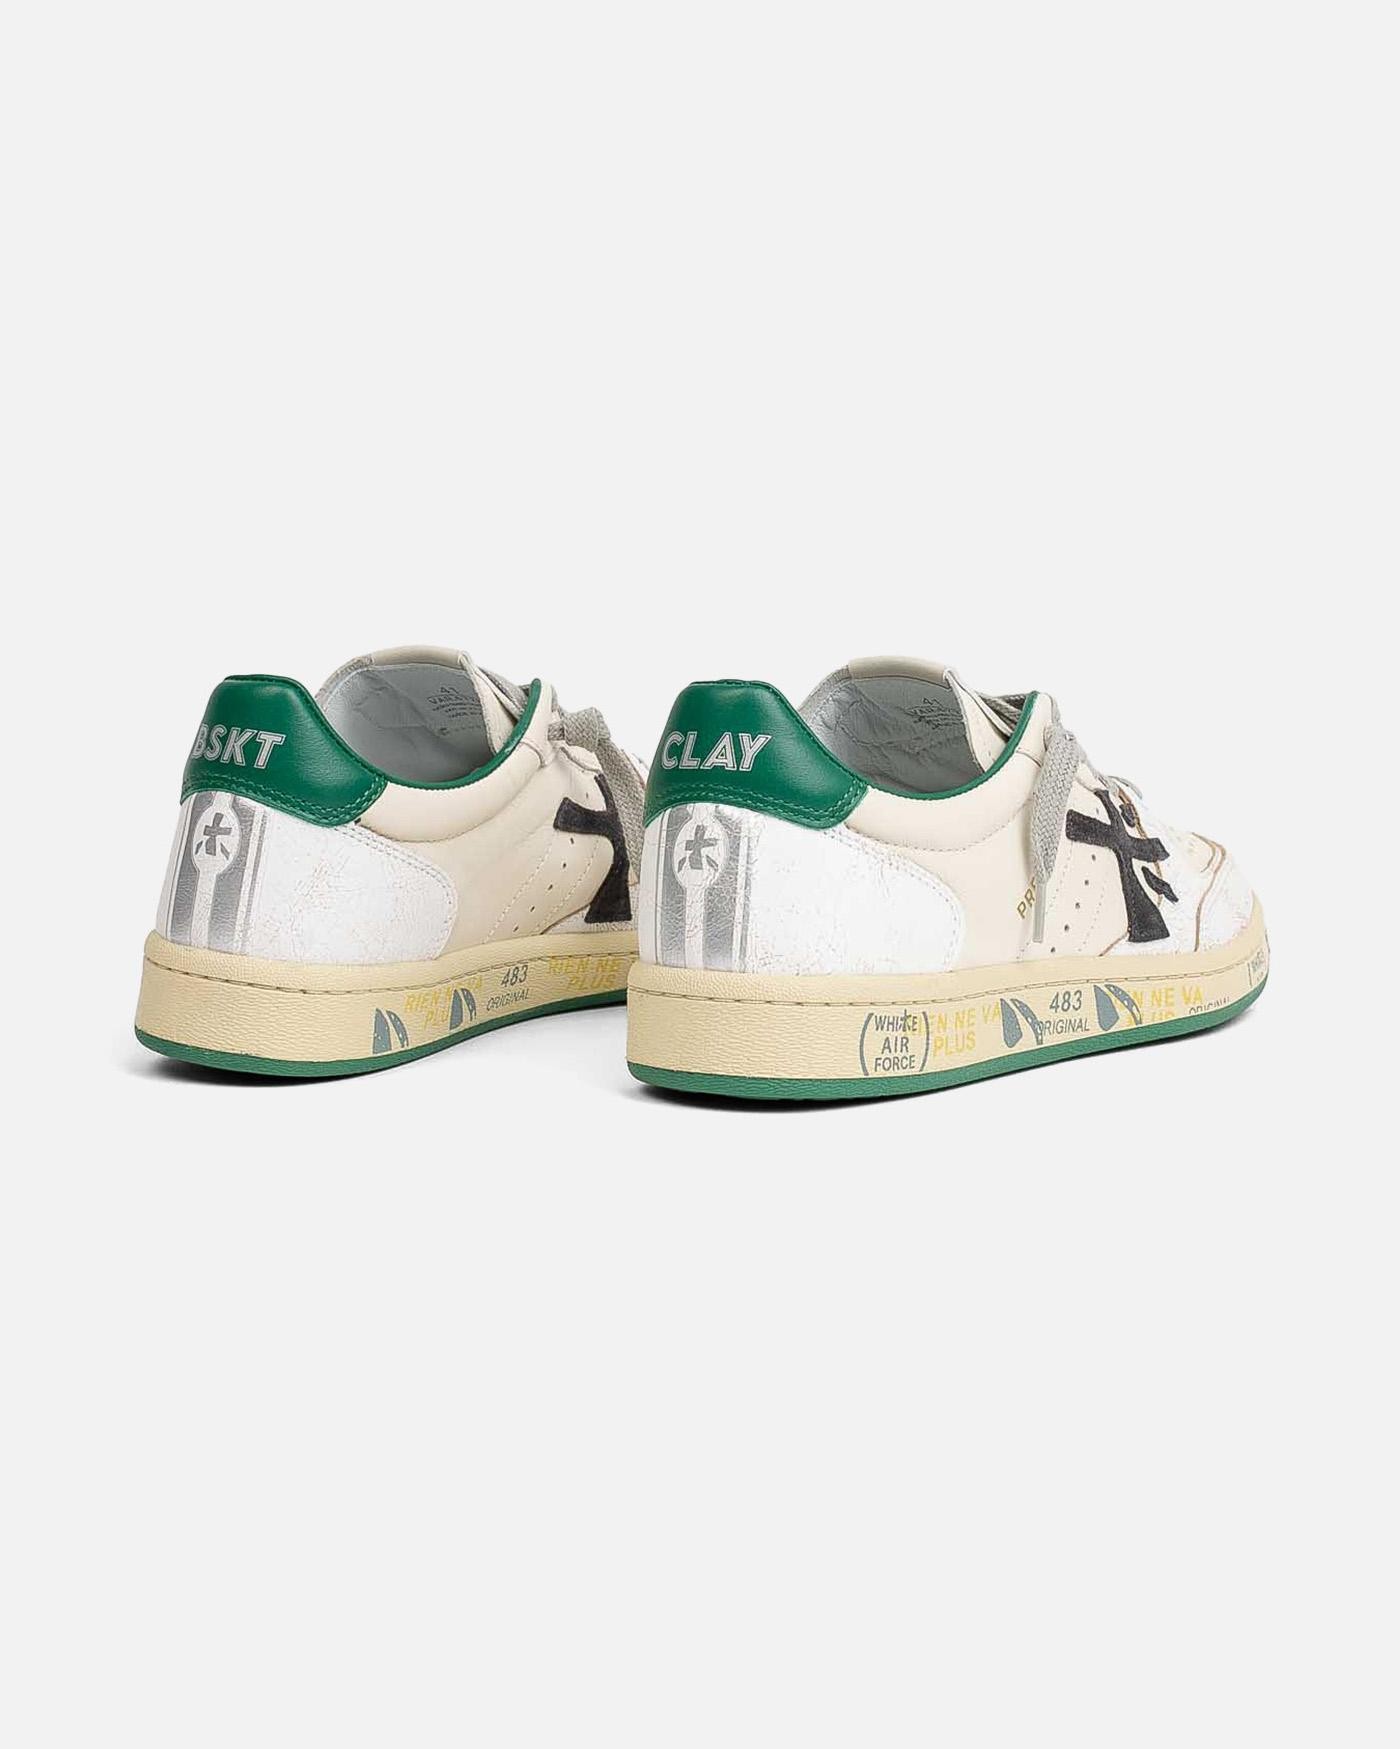 premiata-zapatillas-basket-clay-var-6778-sneakers-white-blancas-5